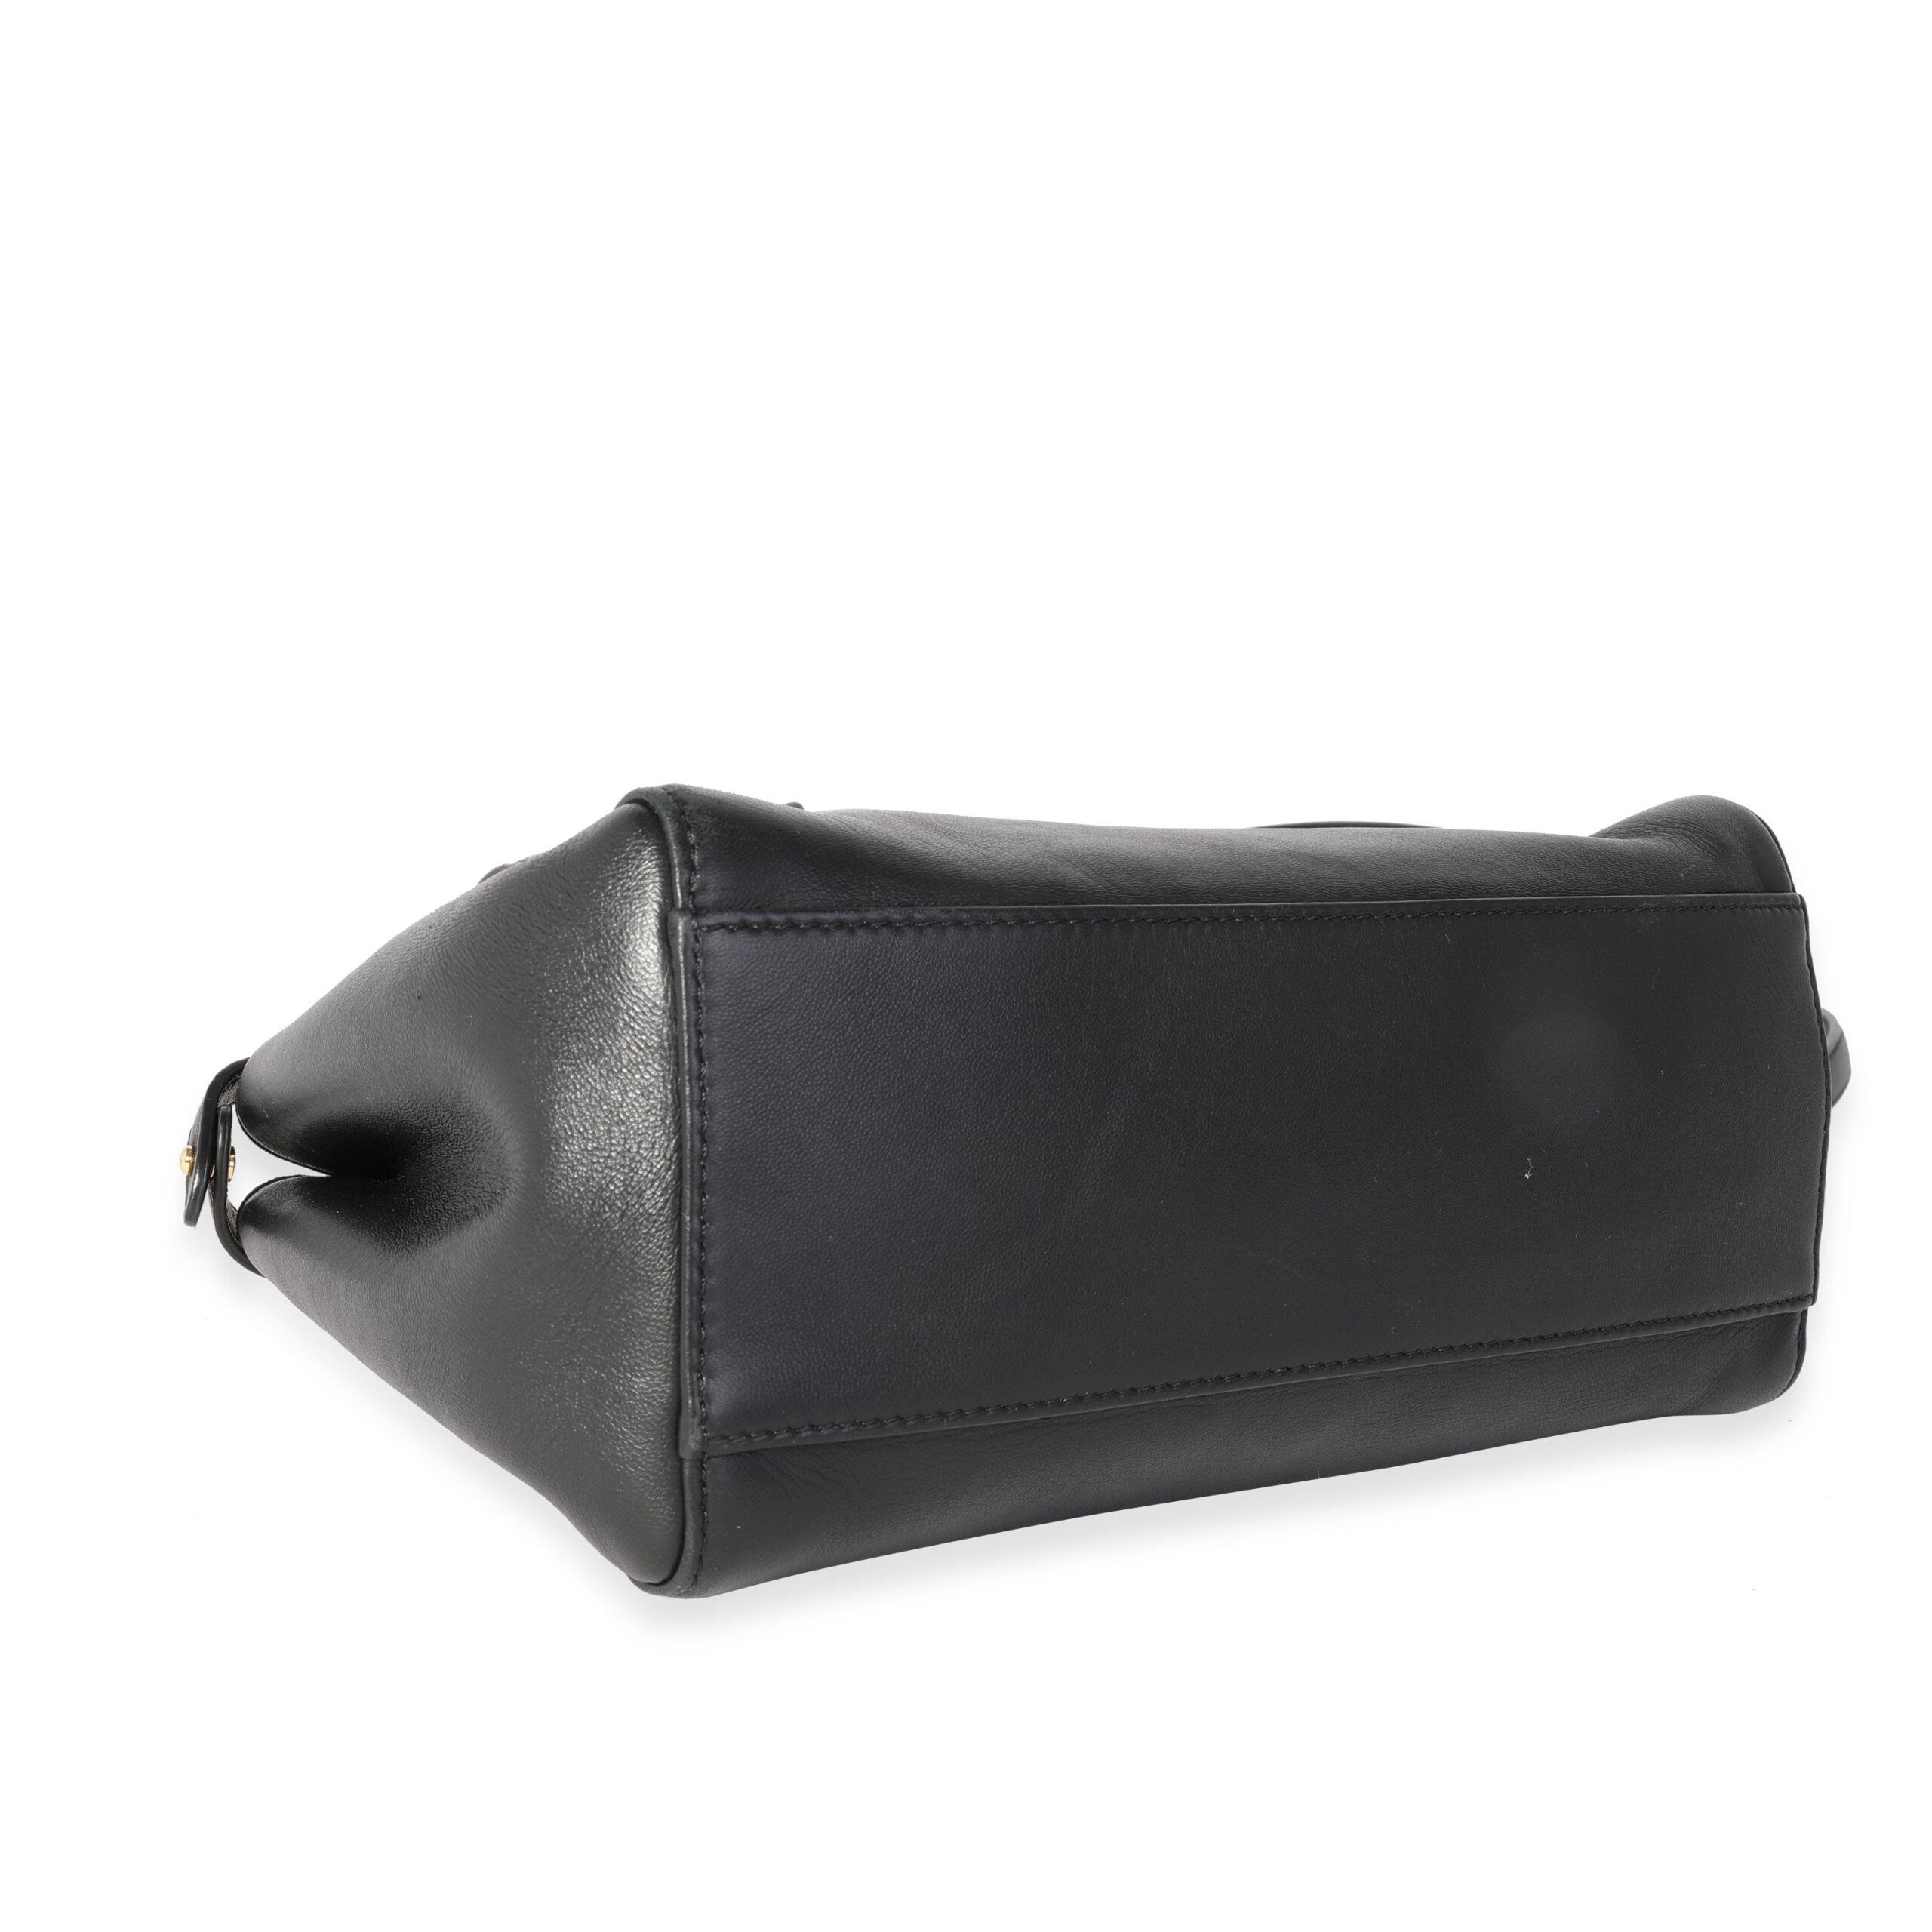 Fendi Fendi Black Nappa Leather Iconic Mini Peekaboo Bag Size ONE SIZE - 5 Thumbnail